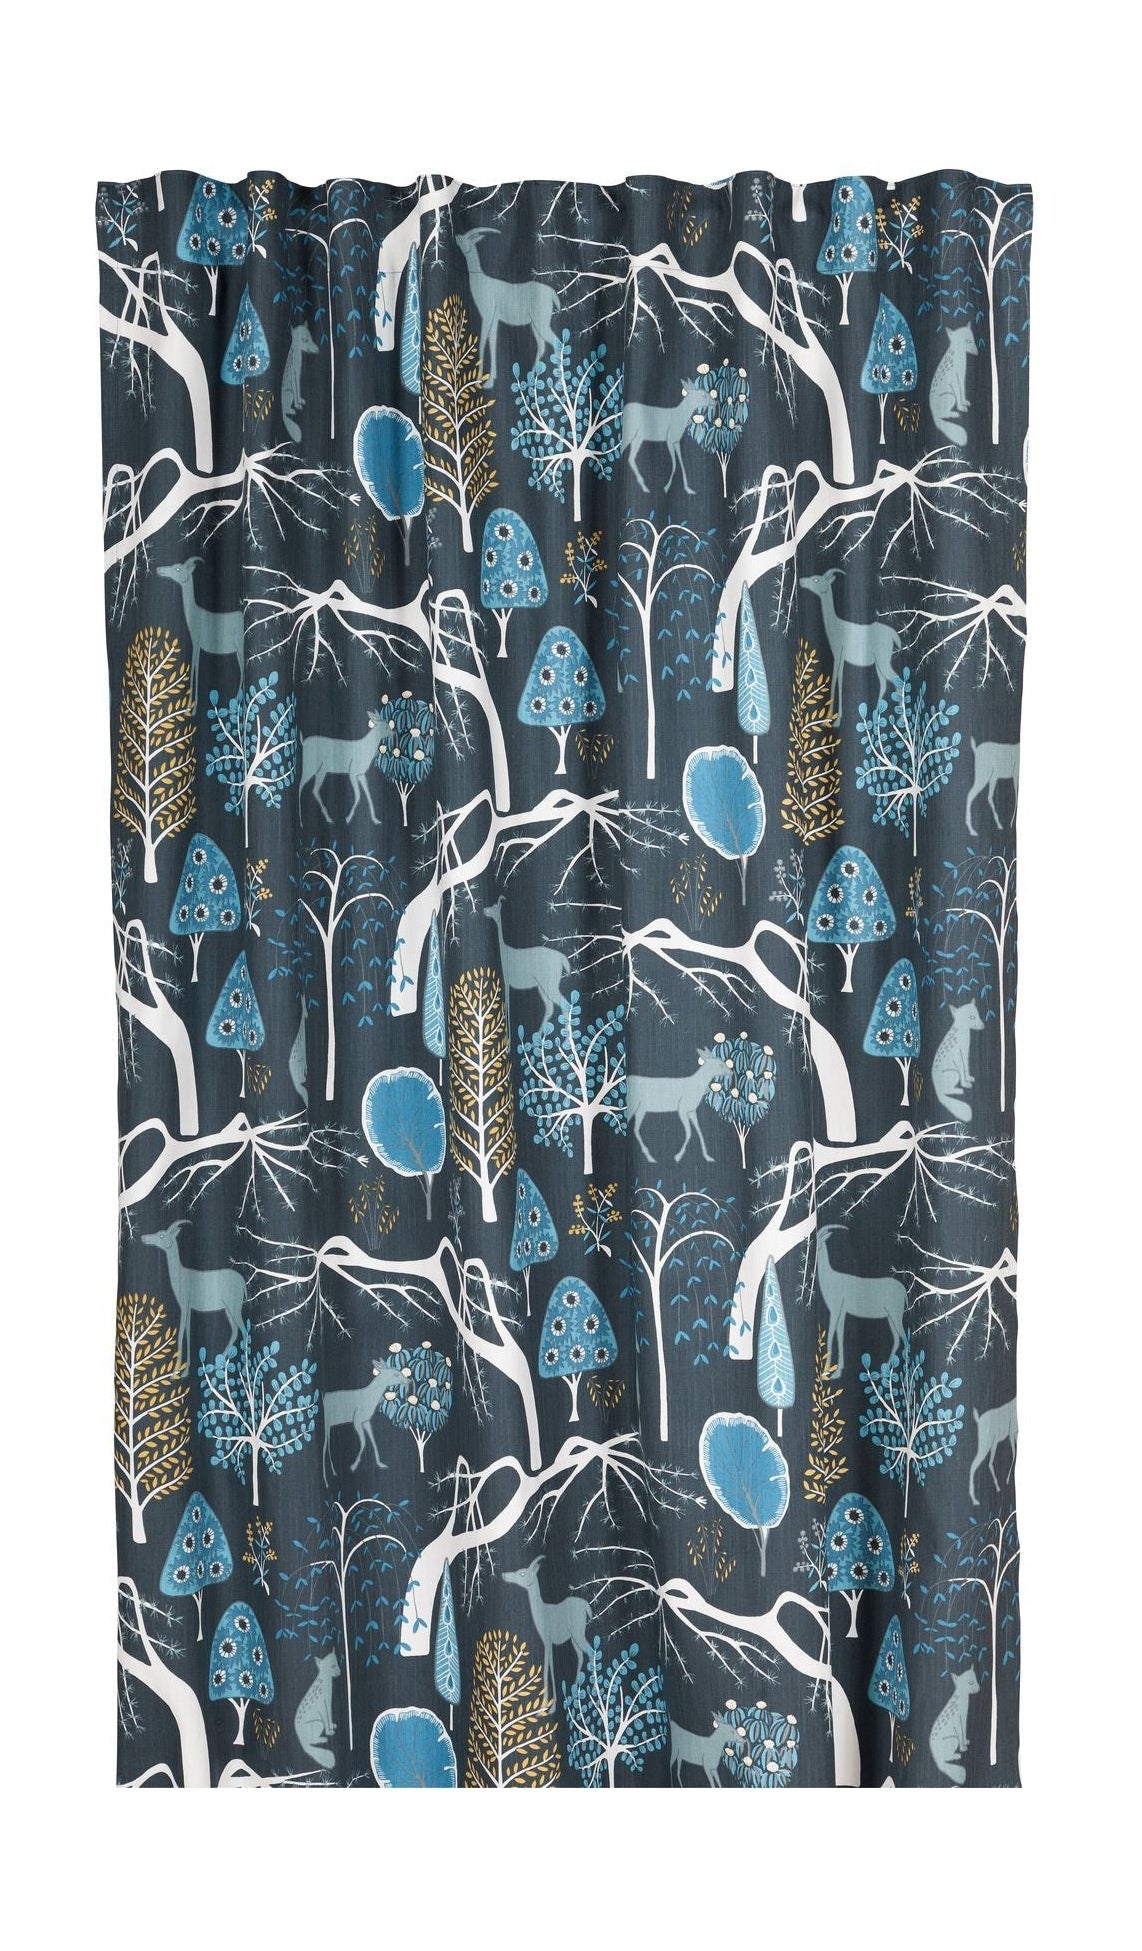 Spira sagoskog gardiner med multi -tap, blå